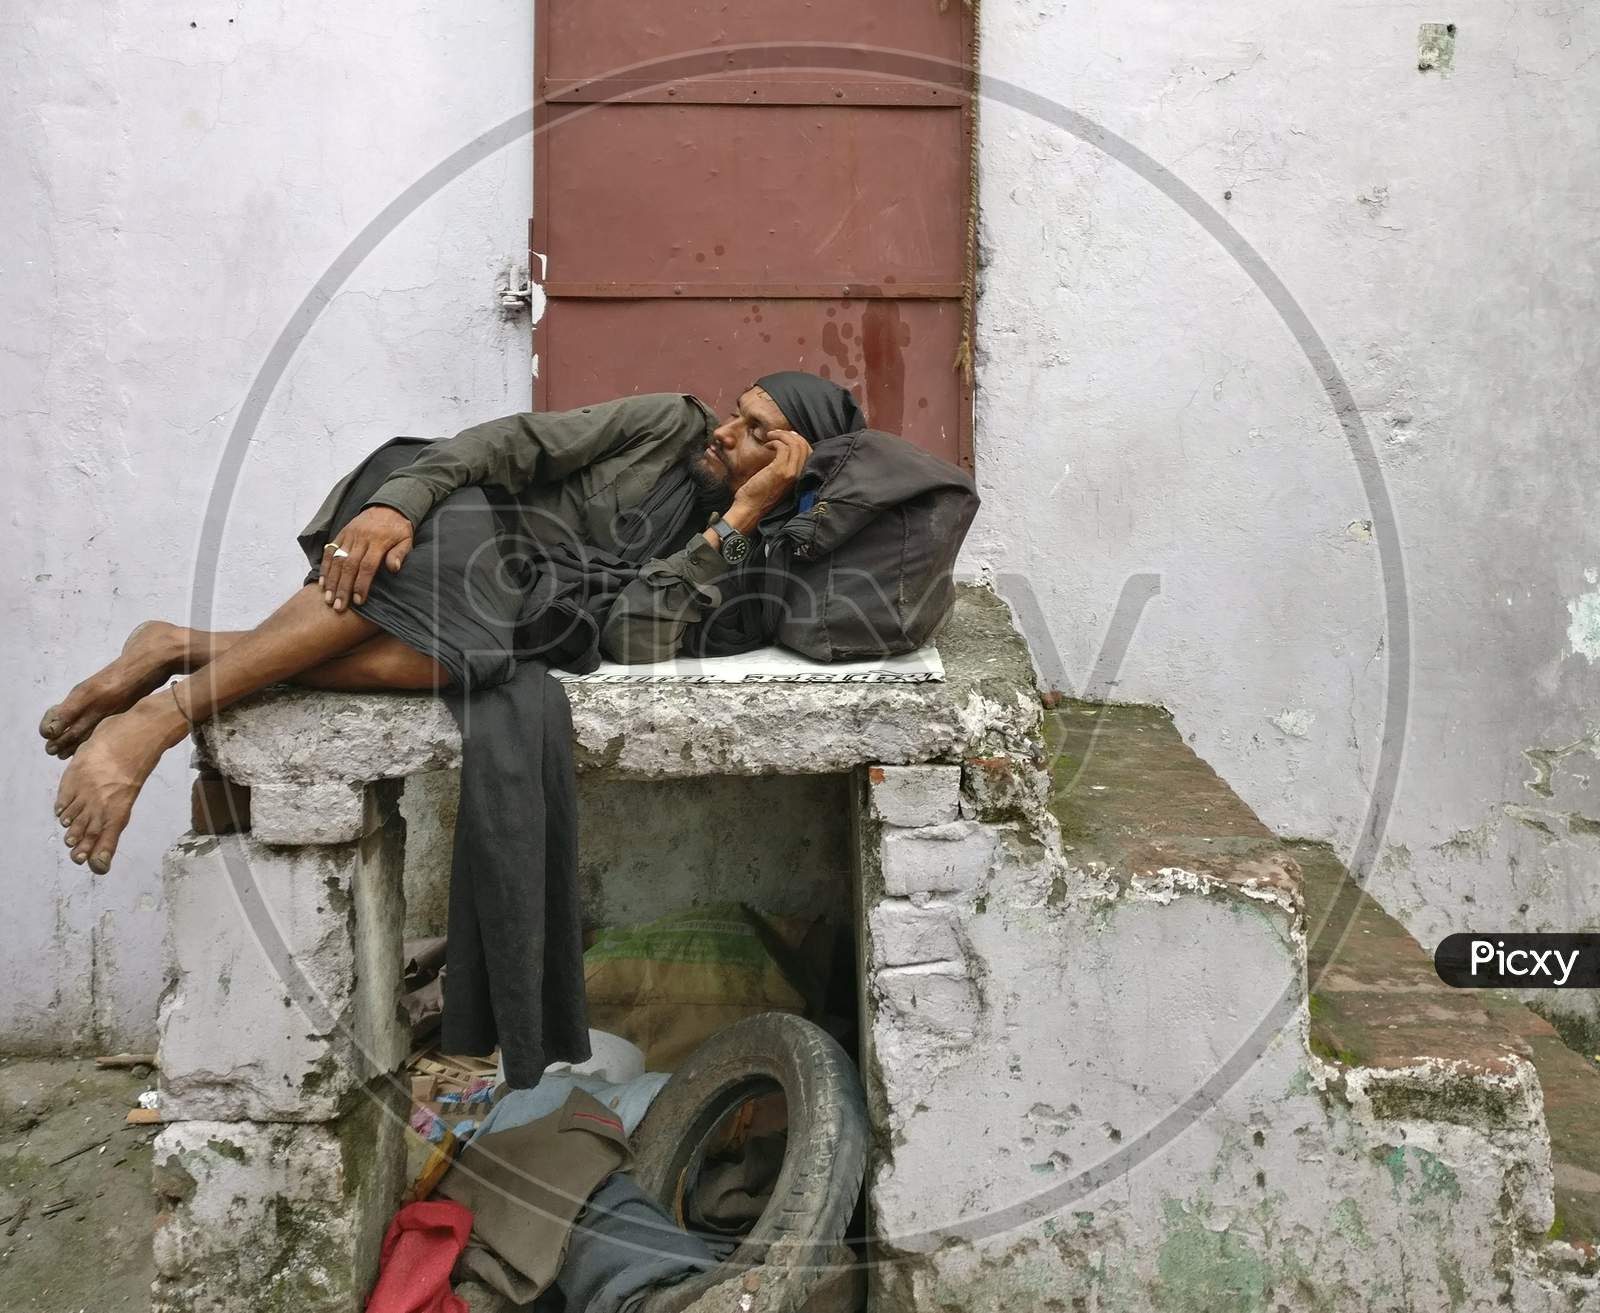 Indian Street photography sleeping homeless shadu